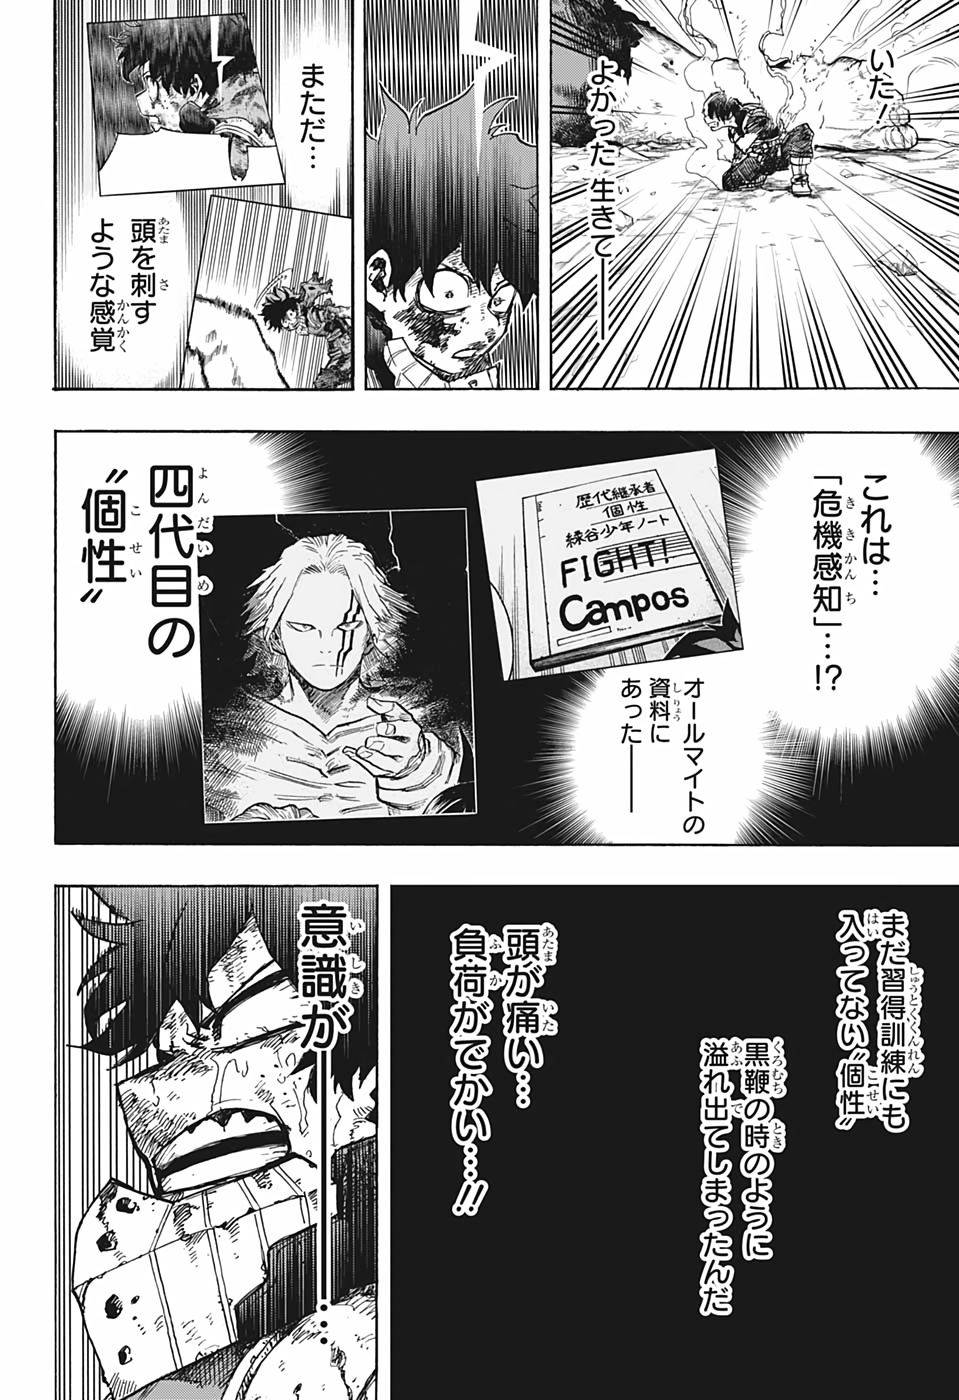 Boku no Hero Academia - Chapter 295 - Page 2